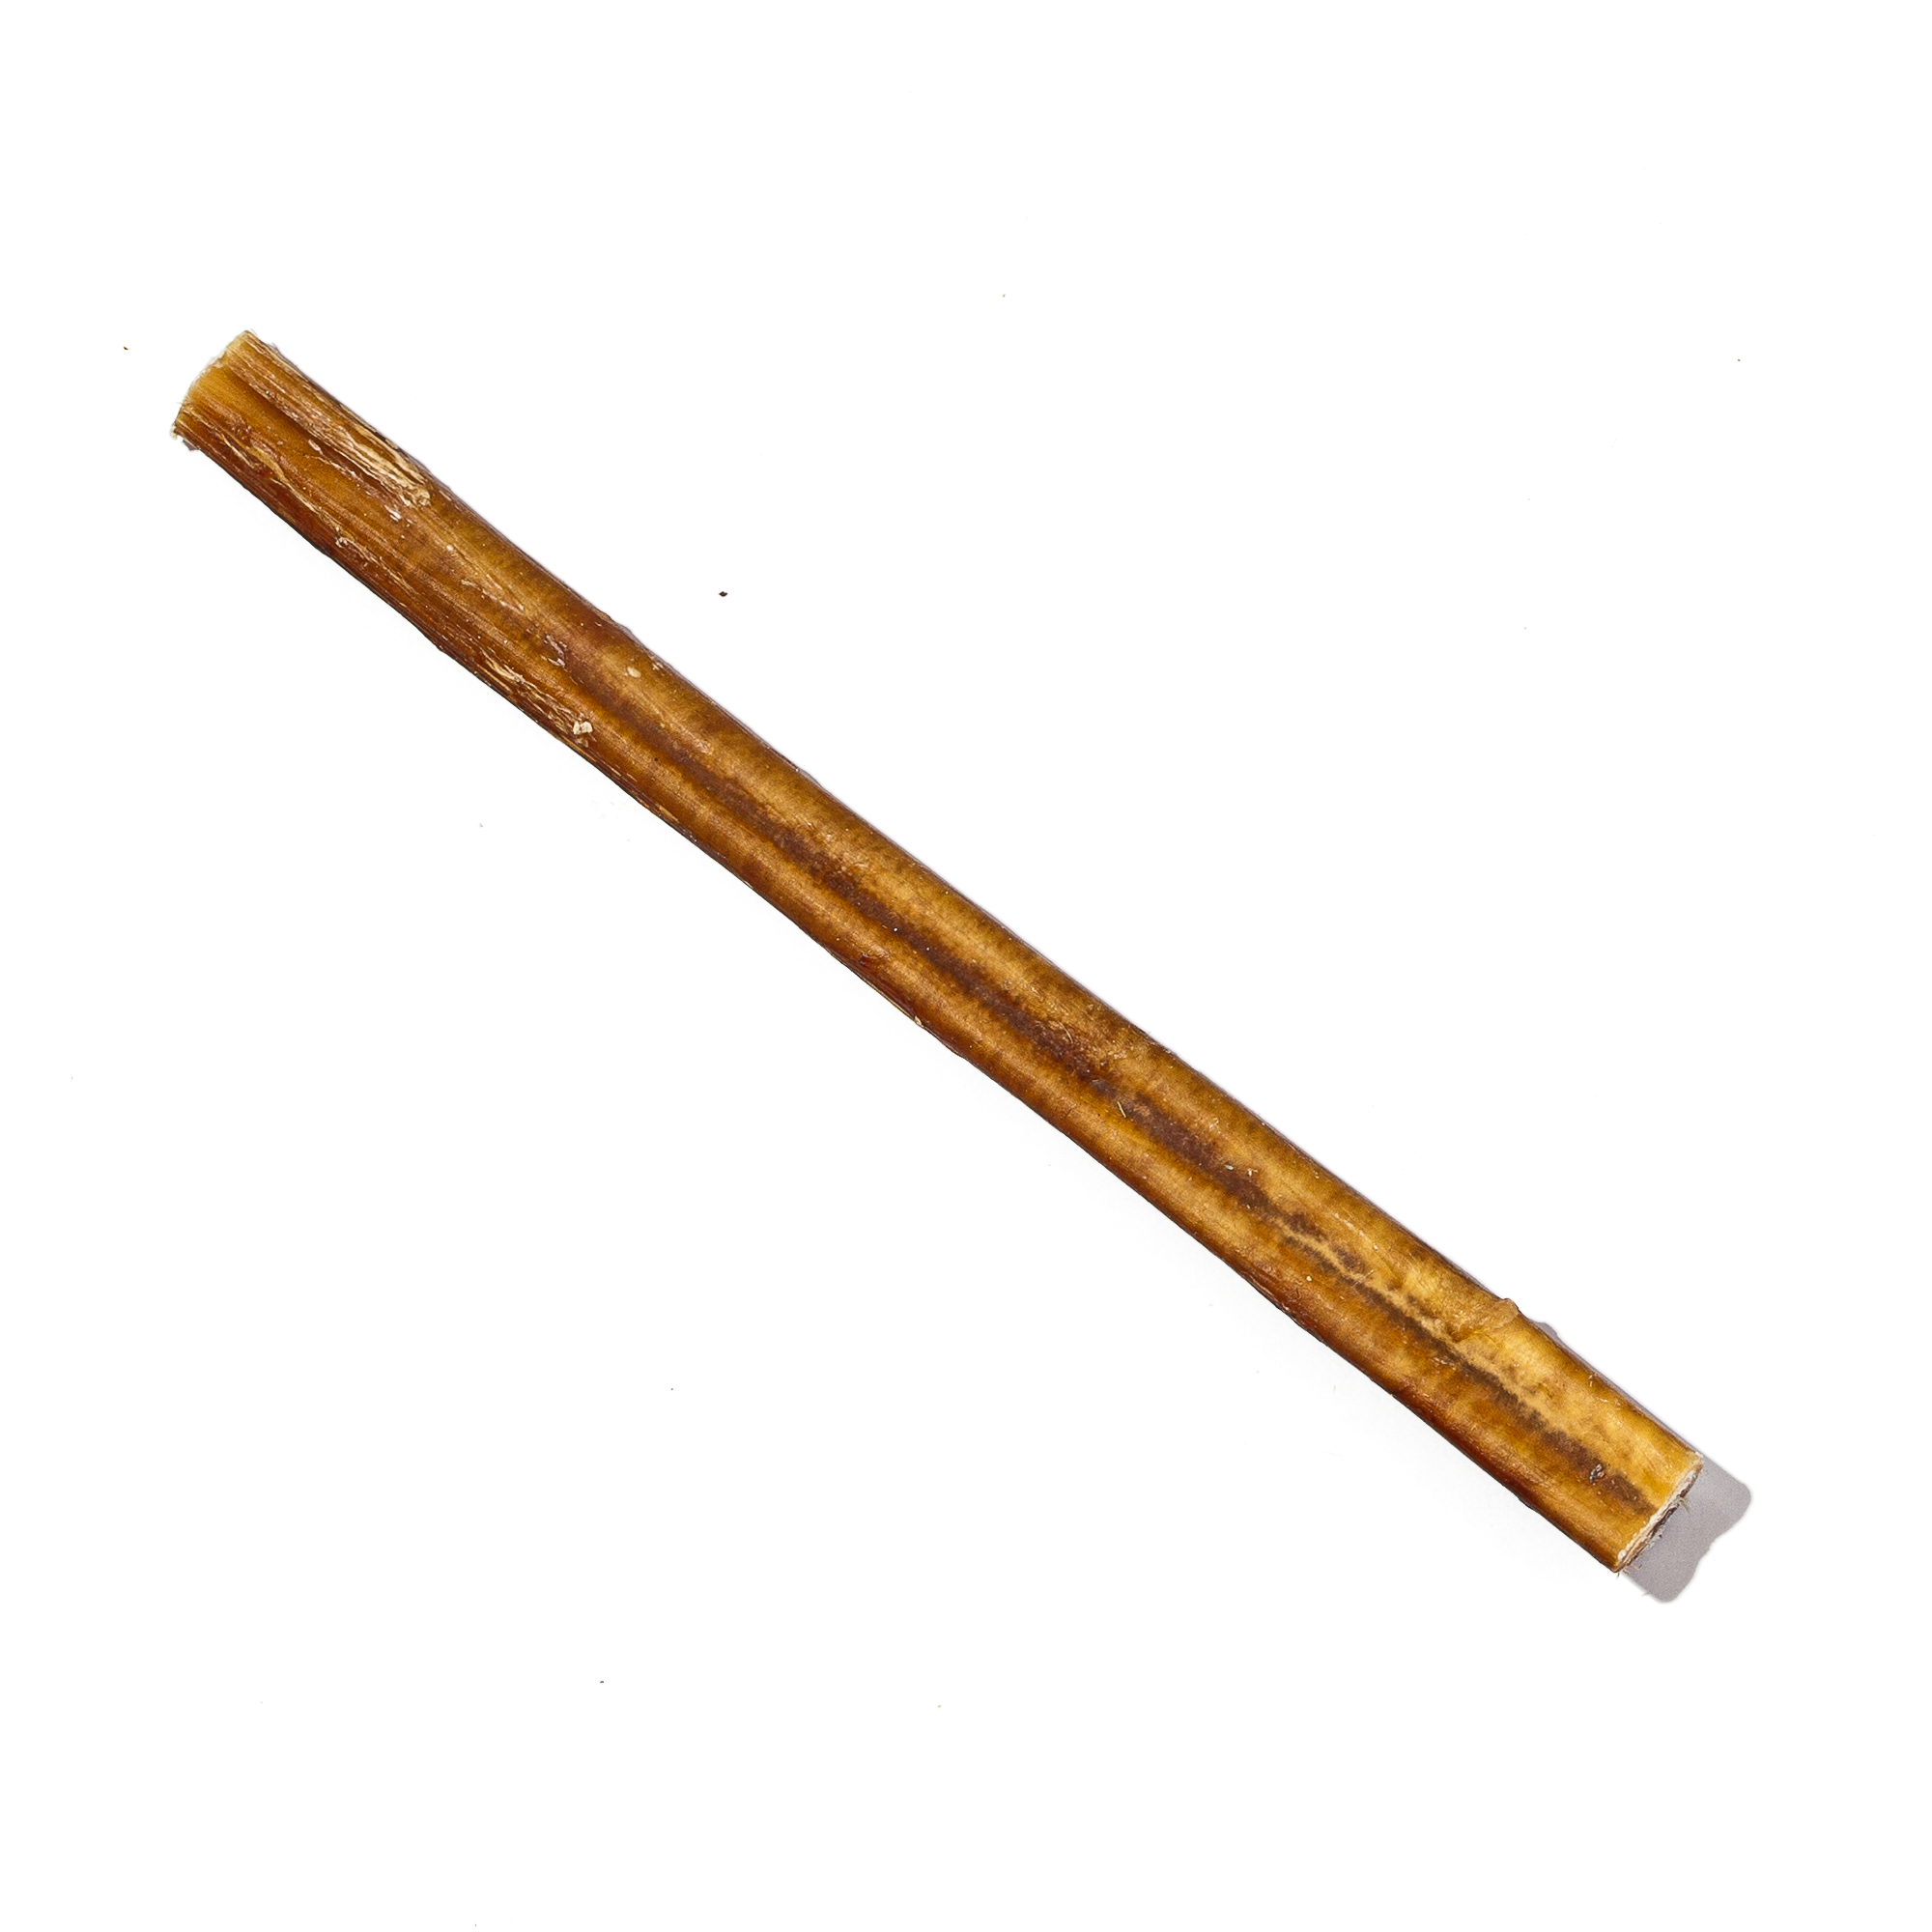 Boneanza Treat Co. Low Odor Standard Bully Stick 6" 6pk - Mutts & Co.